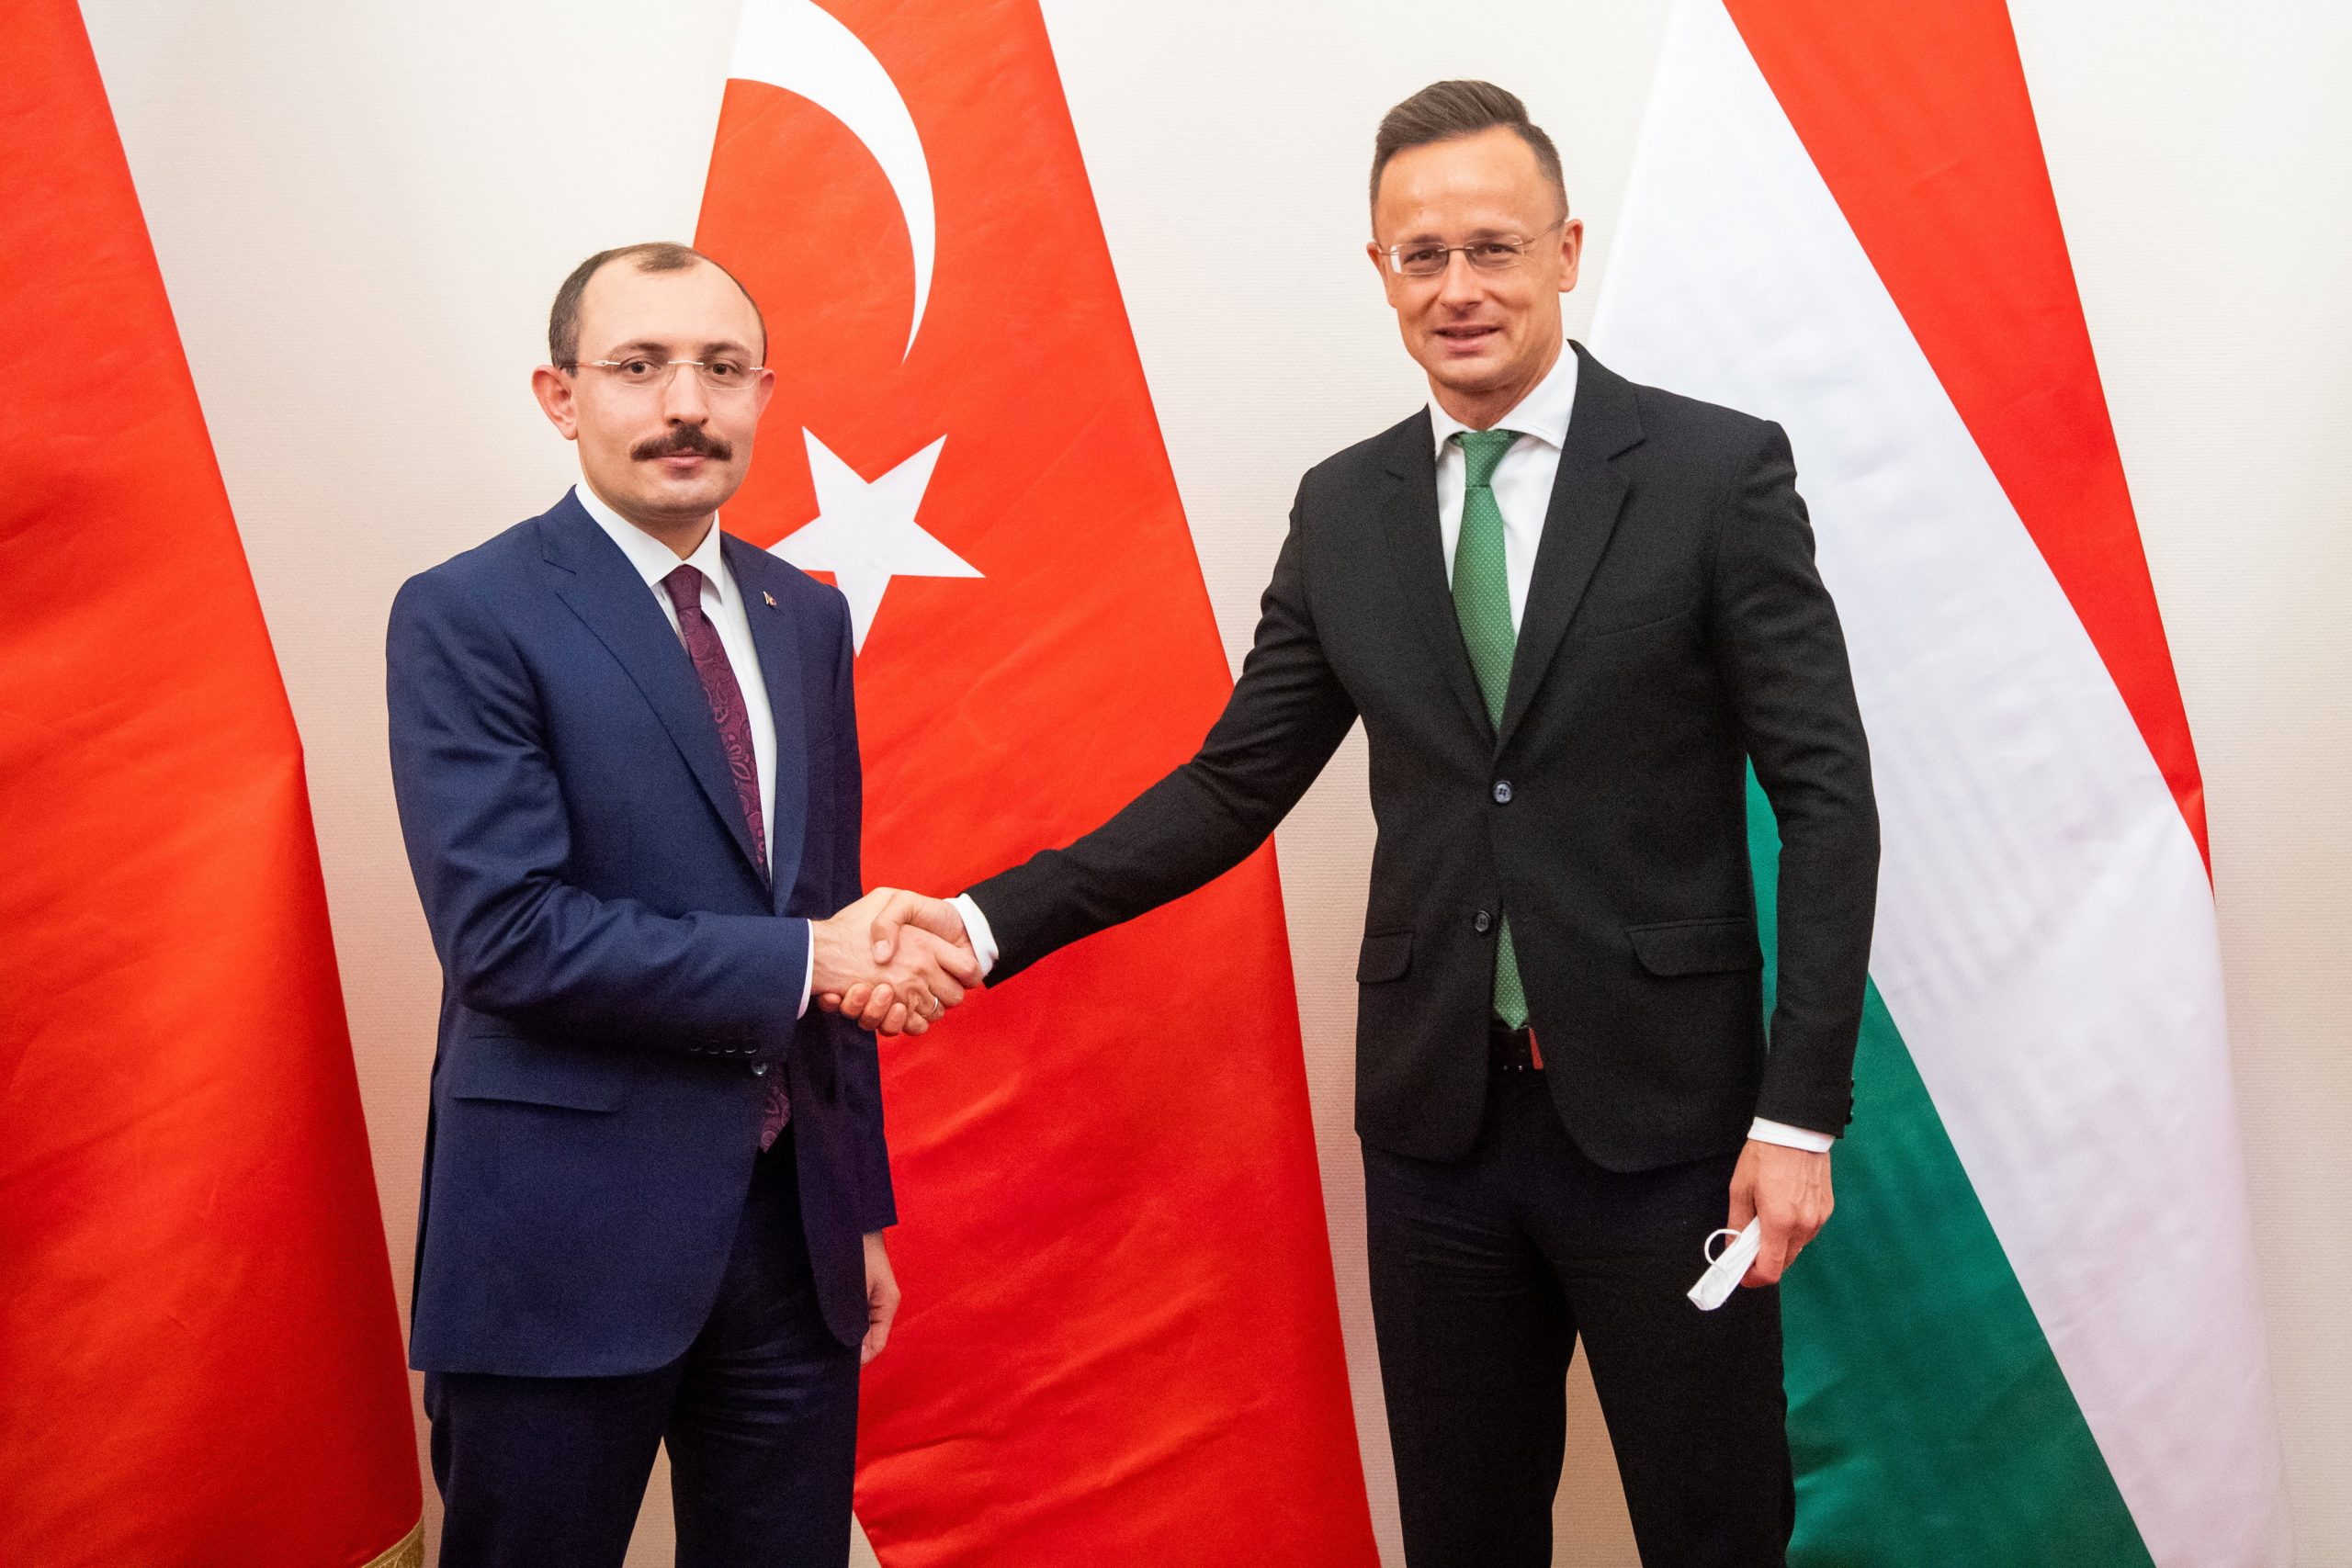 FM Szijjártó: Cooperation with Turkey Economic and Security Priority